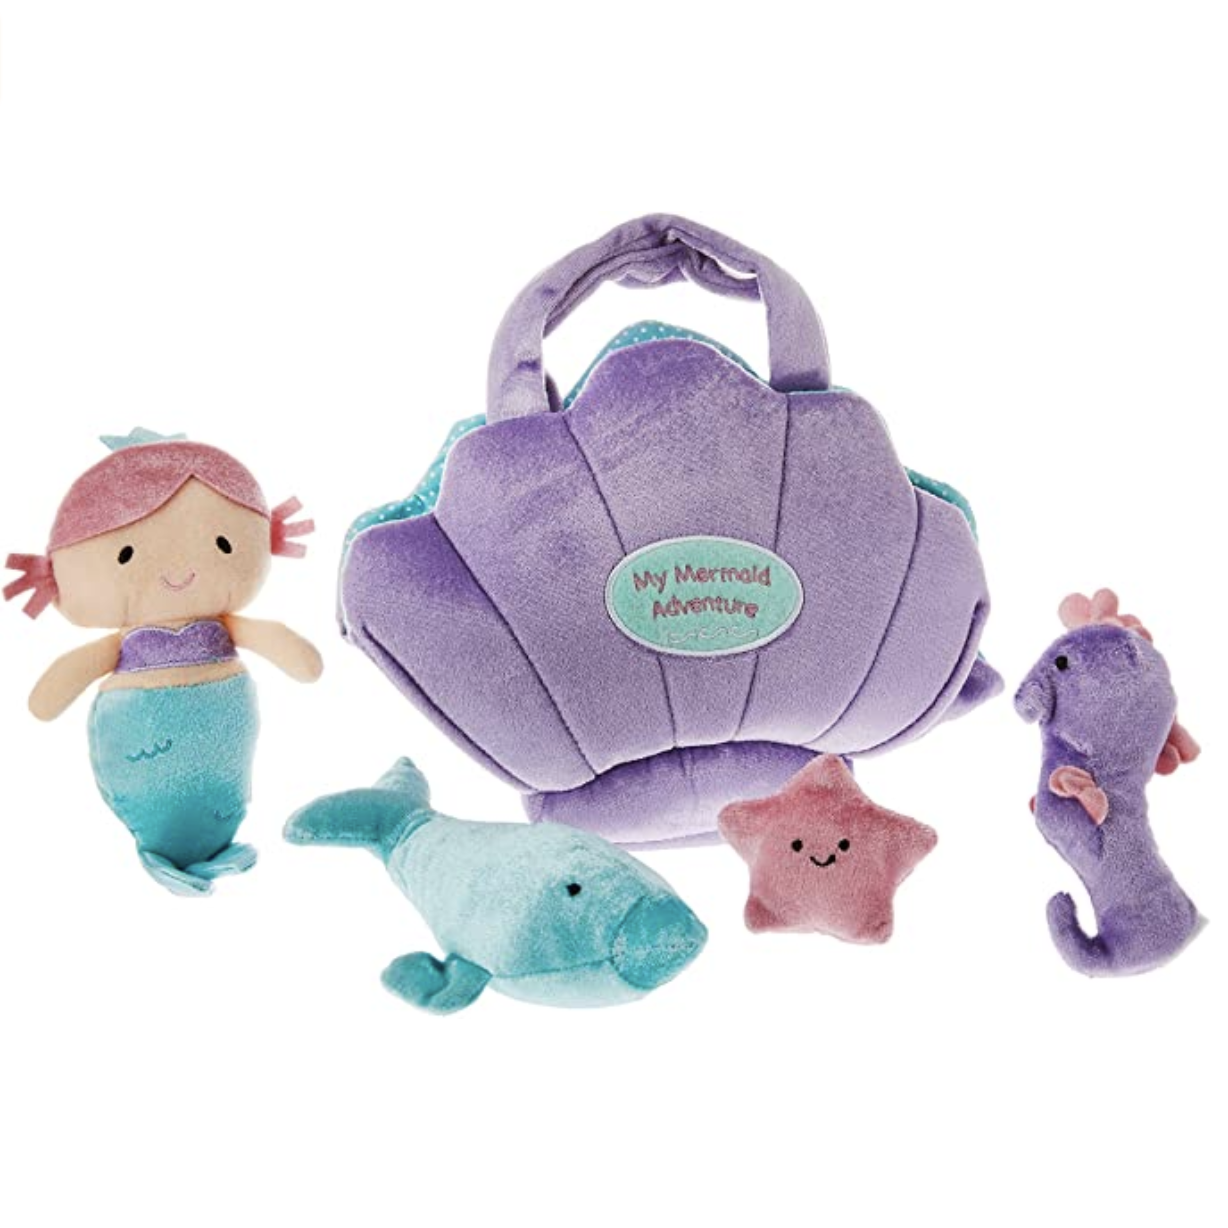 Amazon.com: Baby GUND My First Mermaid Adventure Stuffed Plush Playset, 10", 5 pieces : Toys & Games